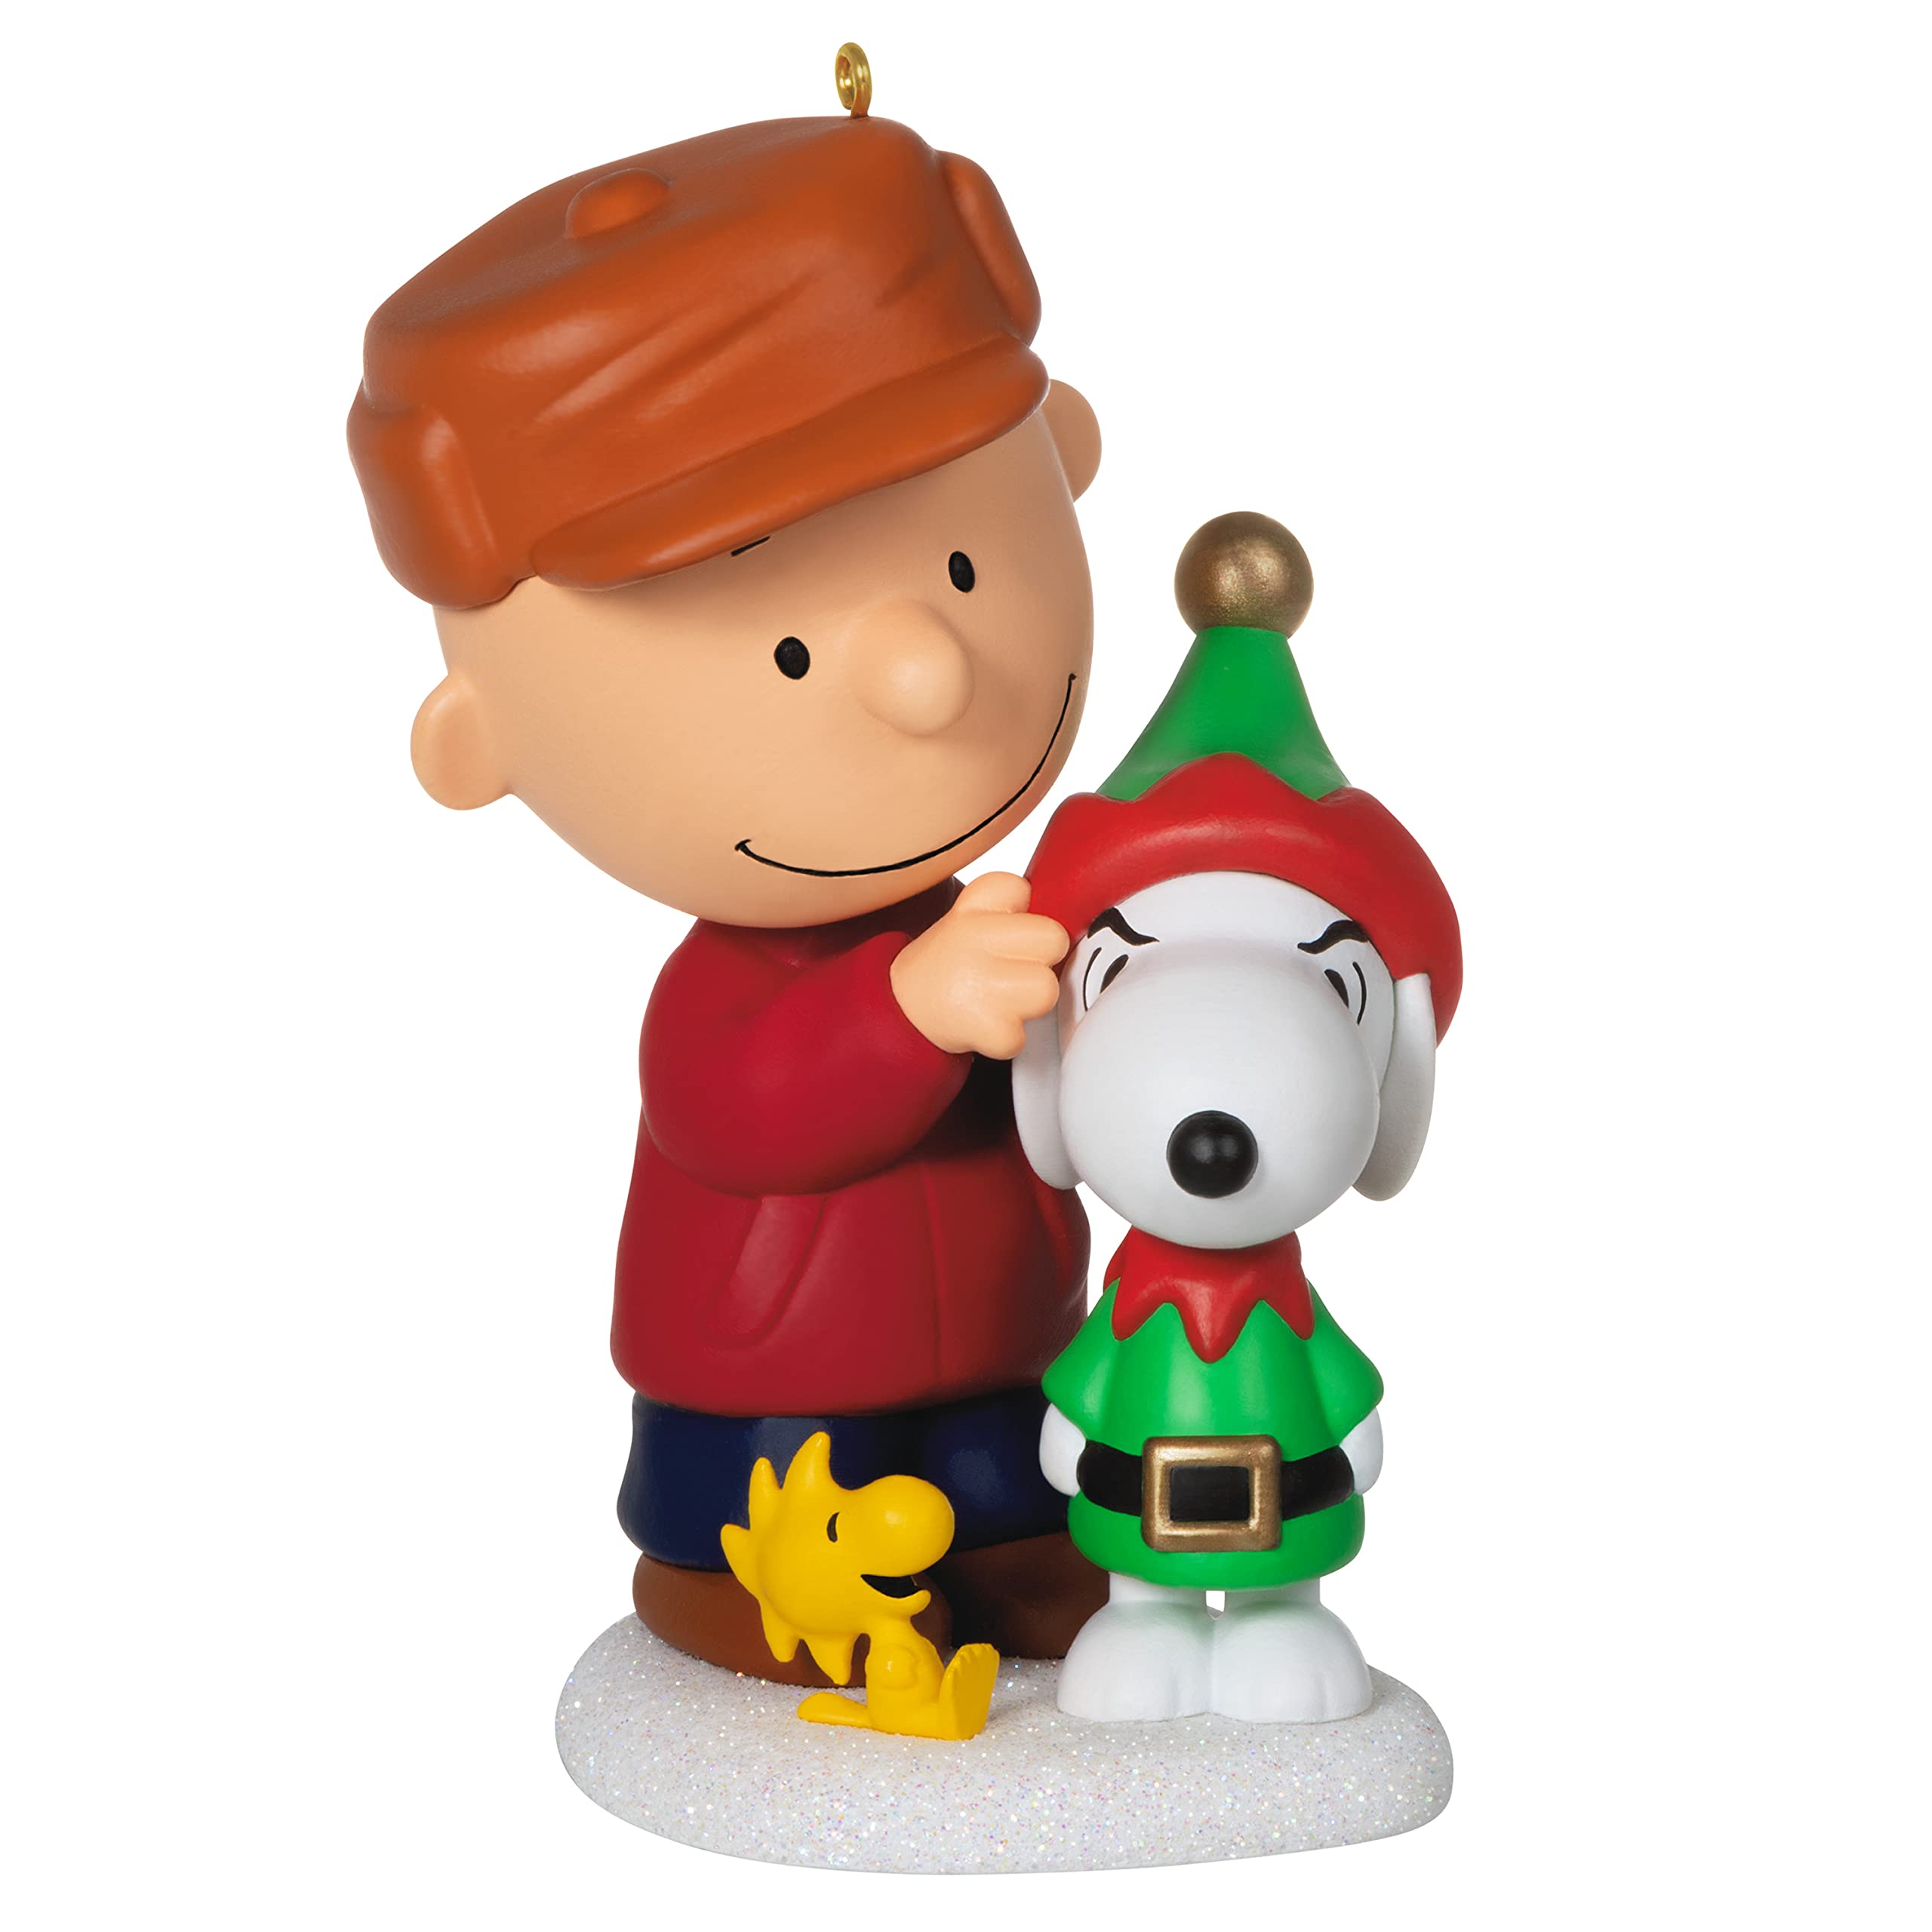 Hallmark Keepsake Christmas Ornament 2021, The Peanuts Gang Dressed Up Dog Snoopy